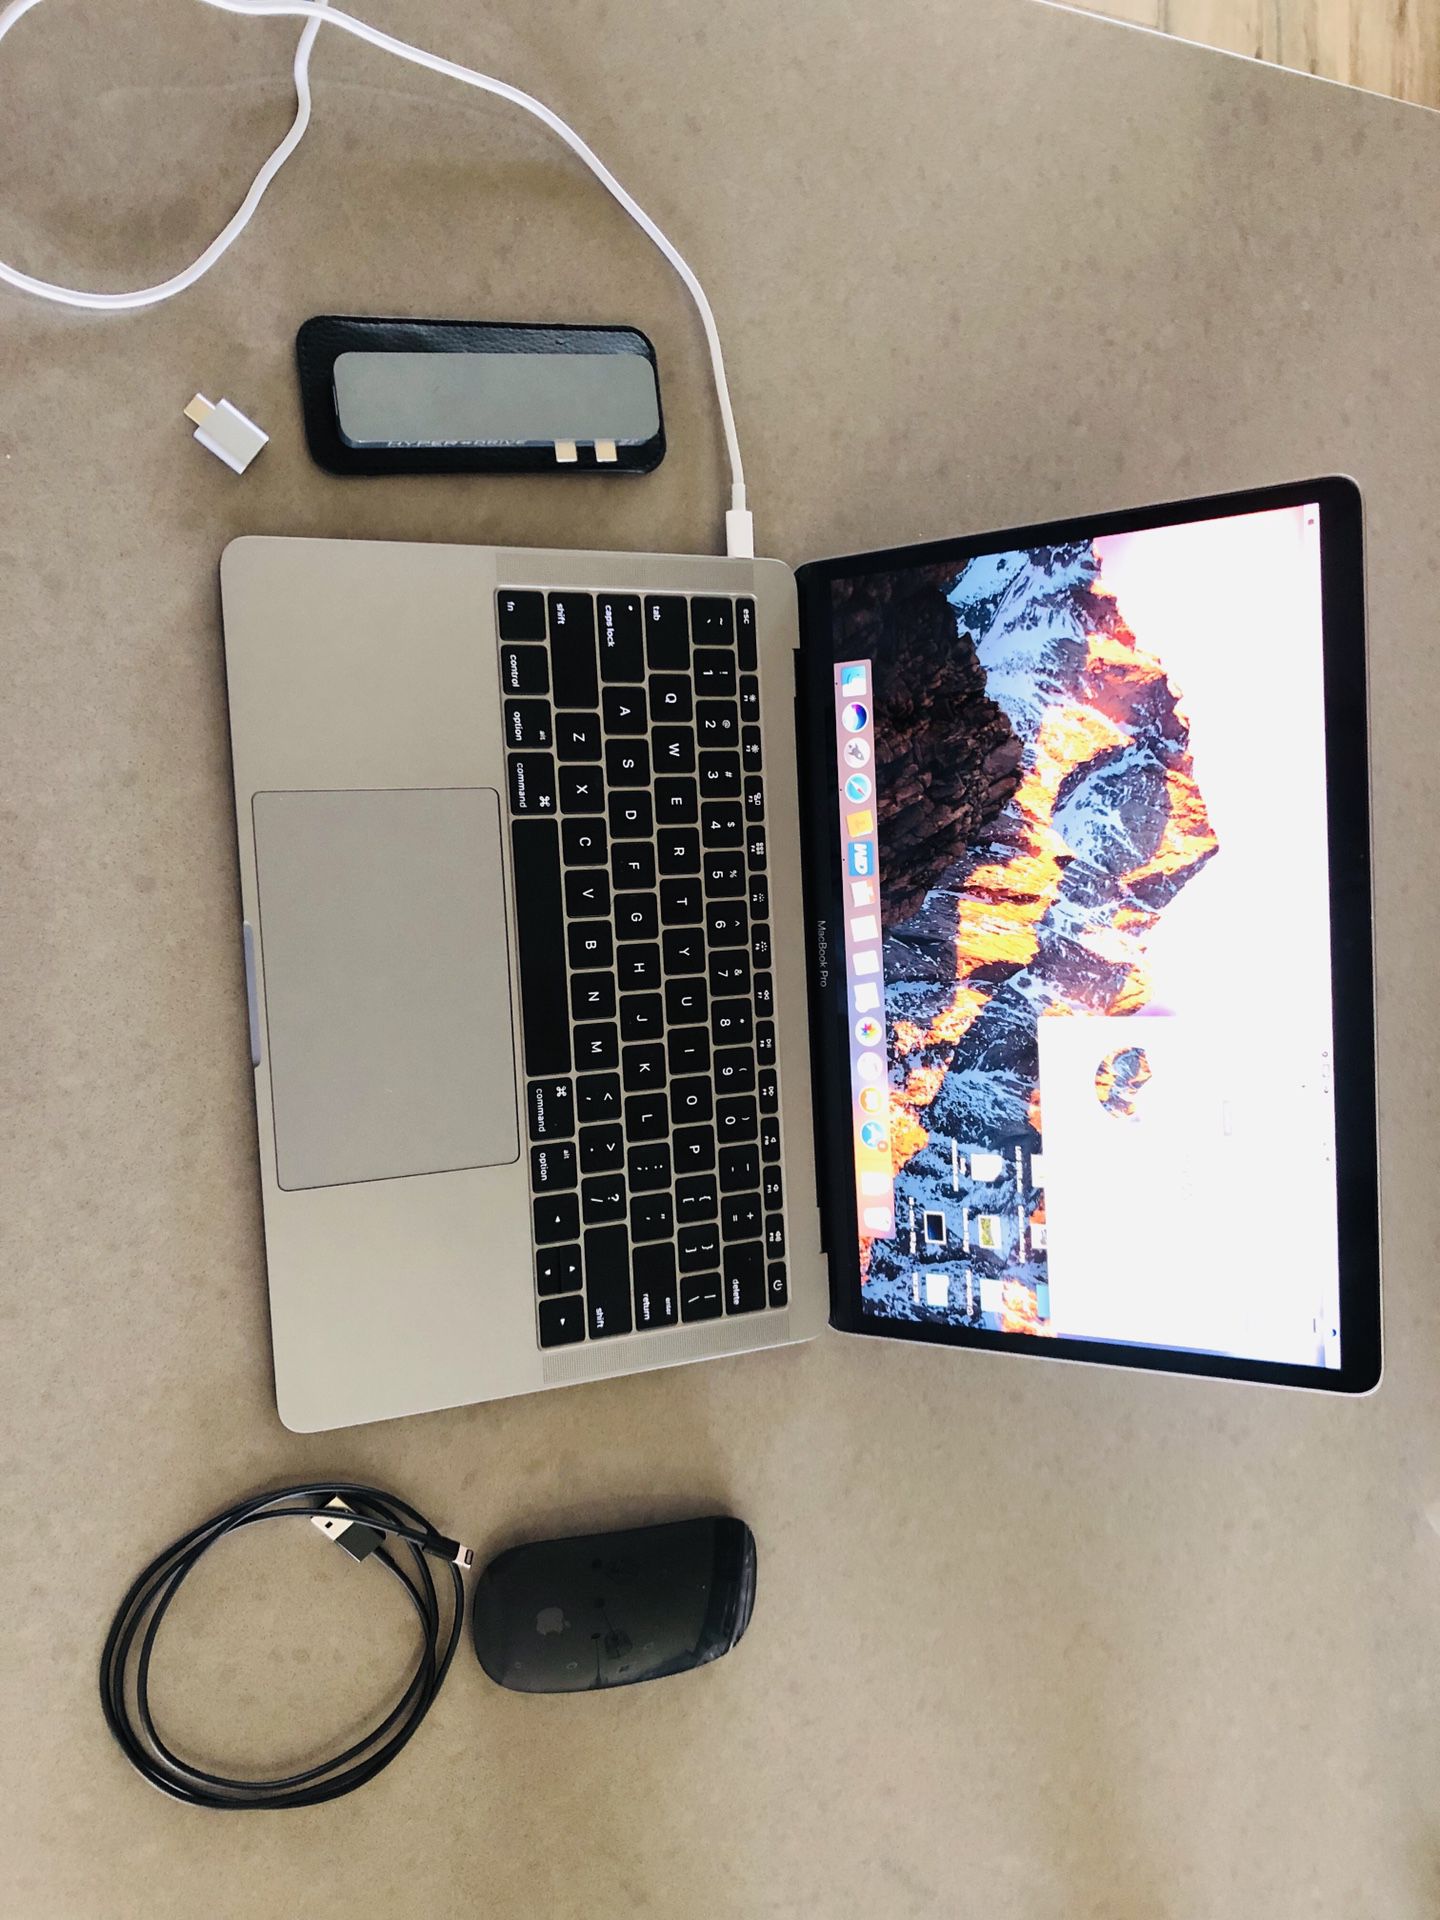 MacBook Pro 2016 with accessories